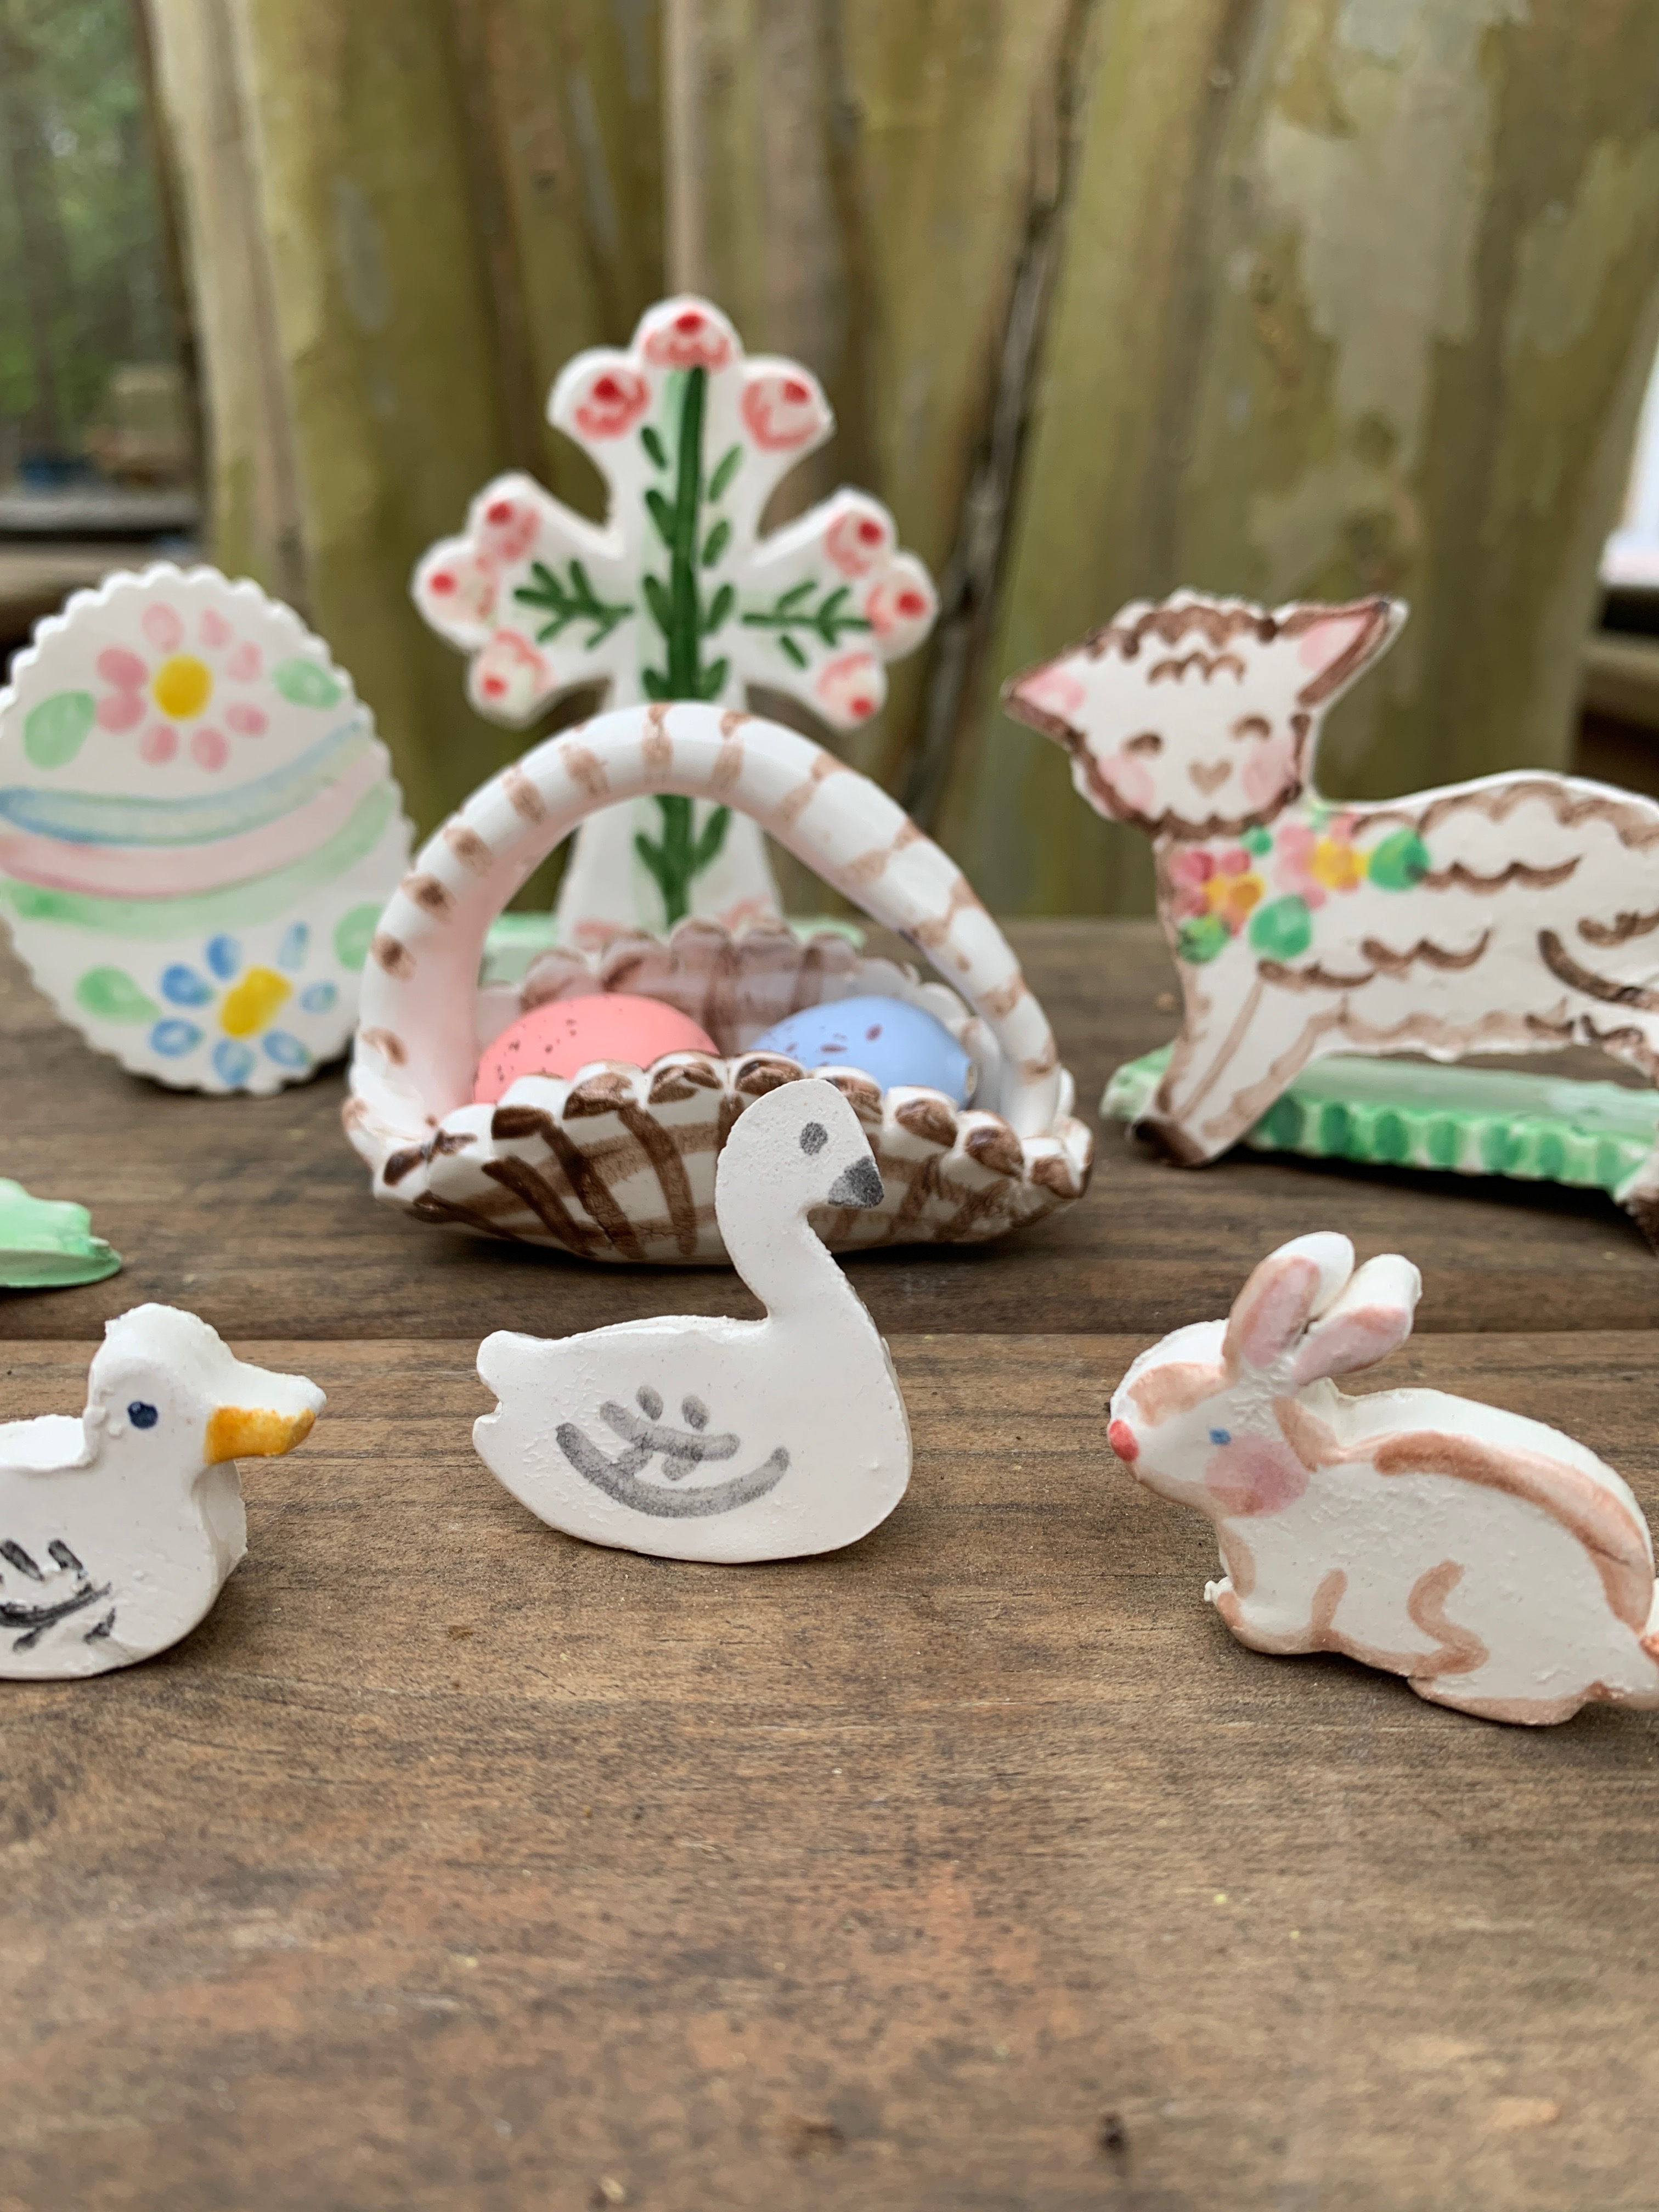 Easter Vignette - Premium Ceramic Figures from Tricia Lowenfield Design 